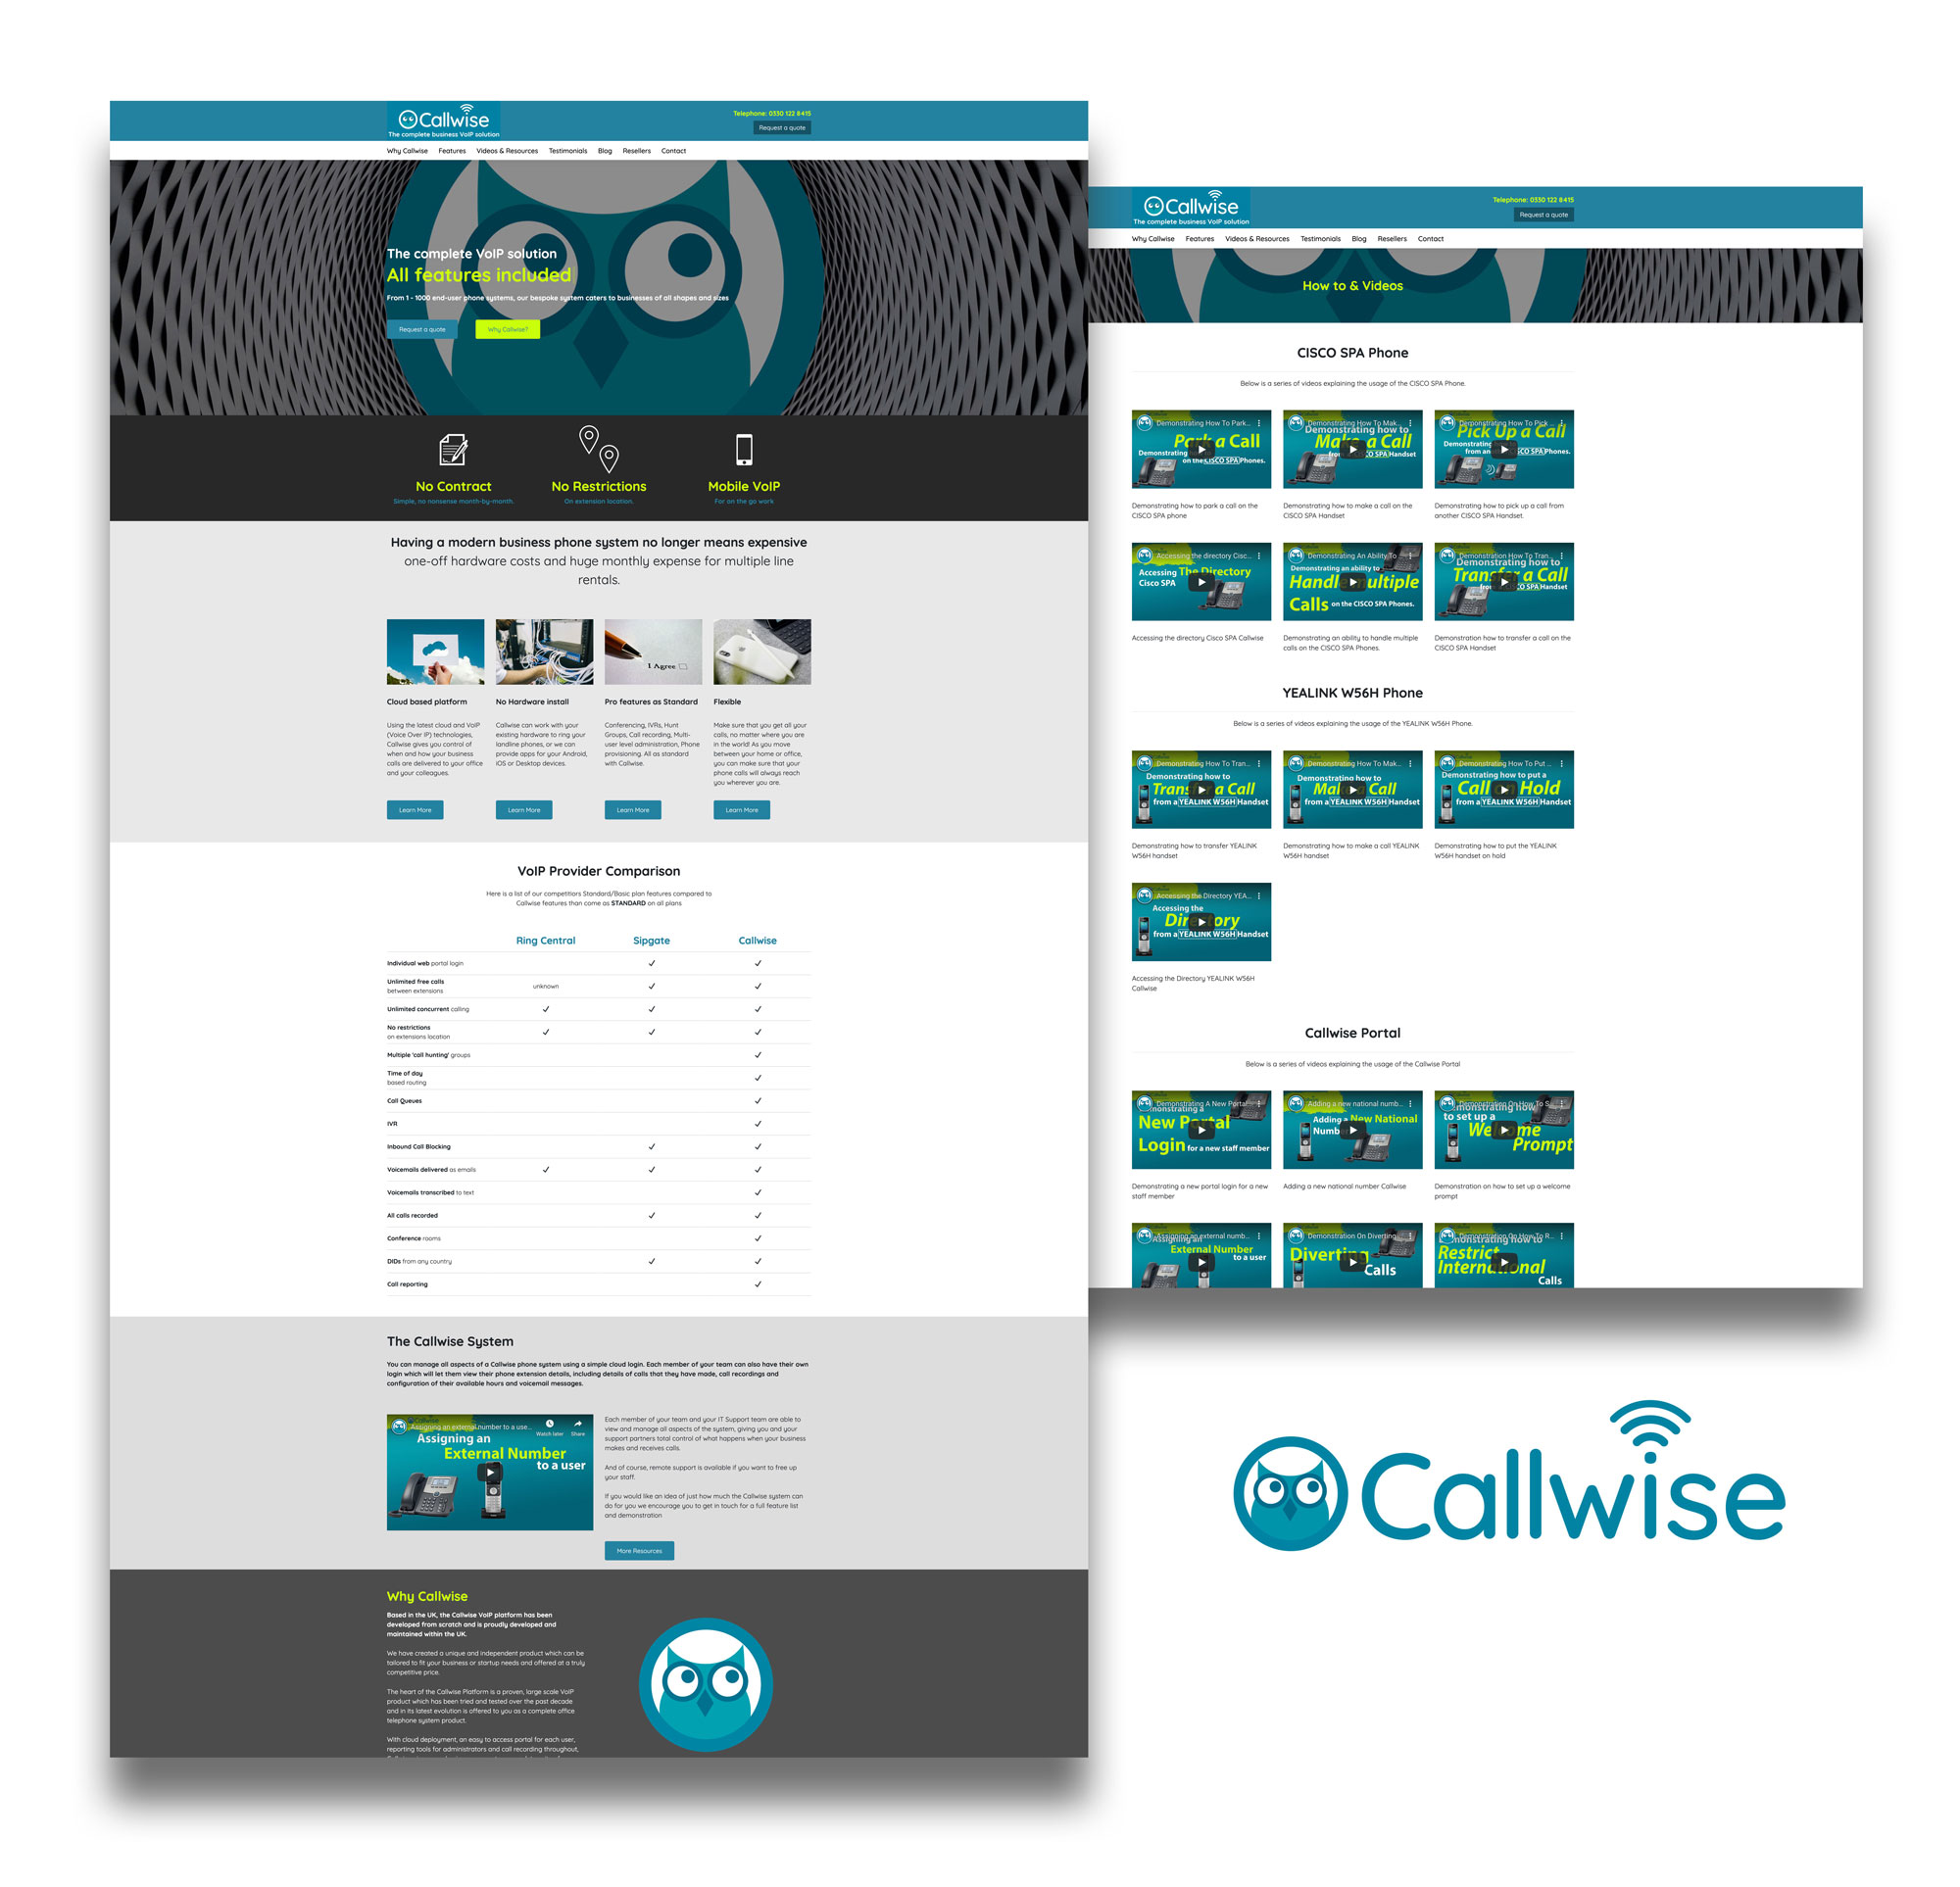 callwise website image